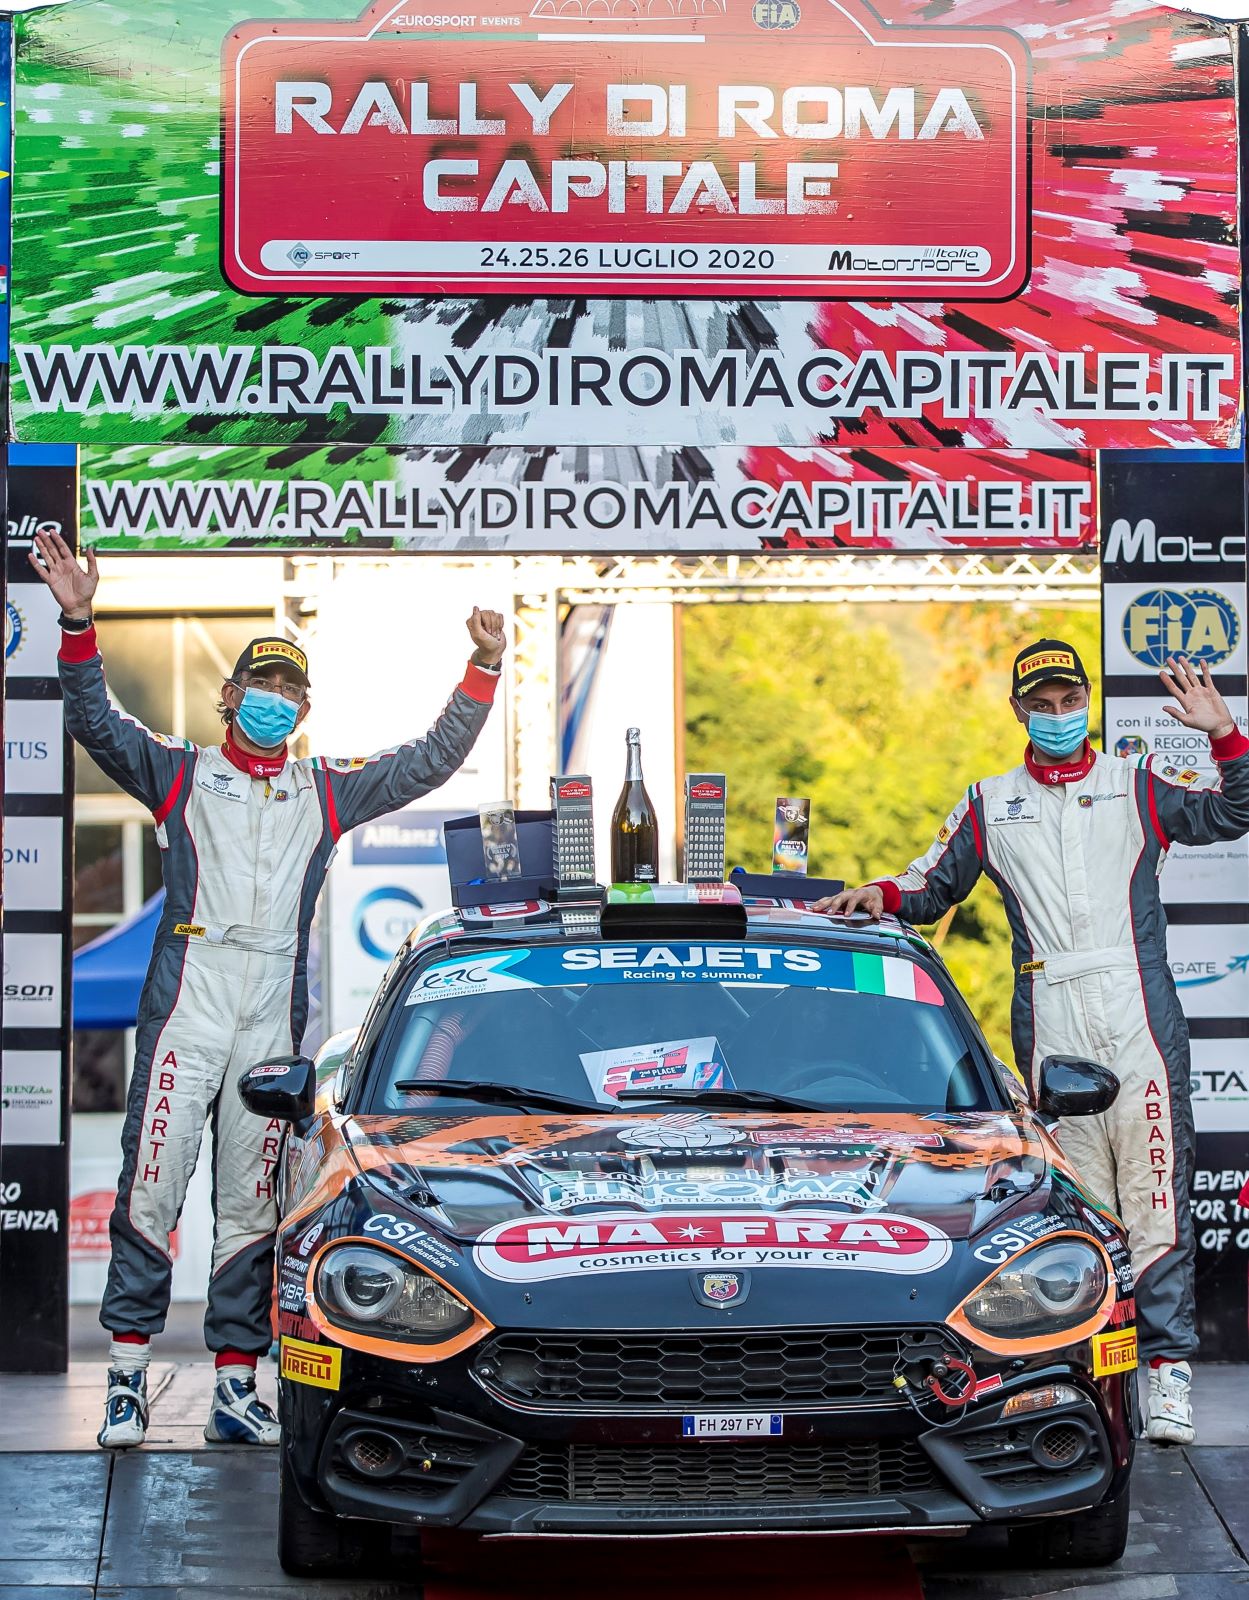 Abarth Rally Cup 2020: o jovem italiano Andrea Mabellini vence o Rally di Roma Capitale, ficando em 1.º em R-GT e em 2.º na classe ERC2 14